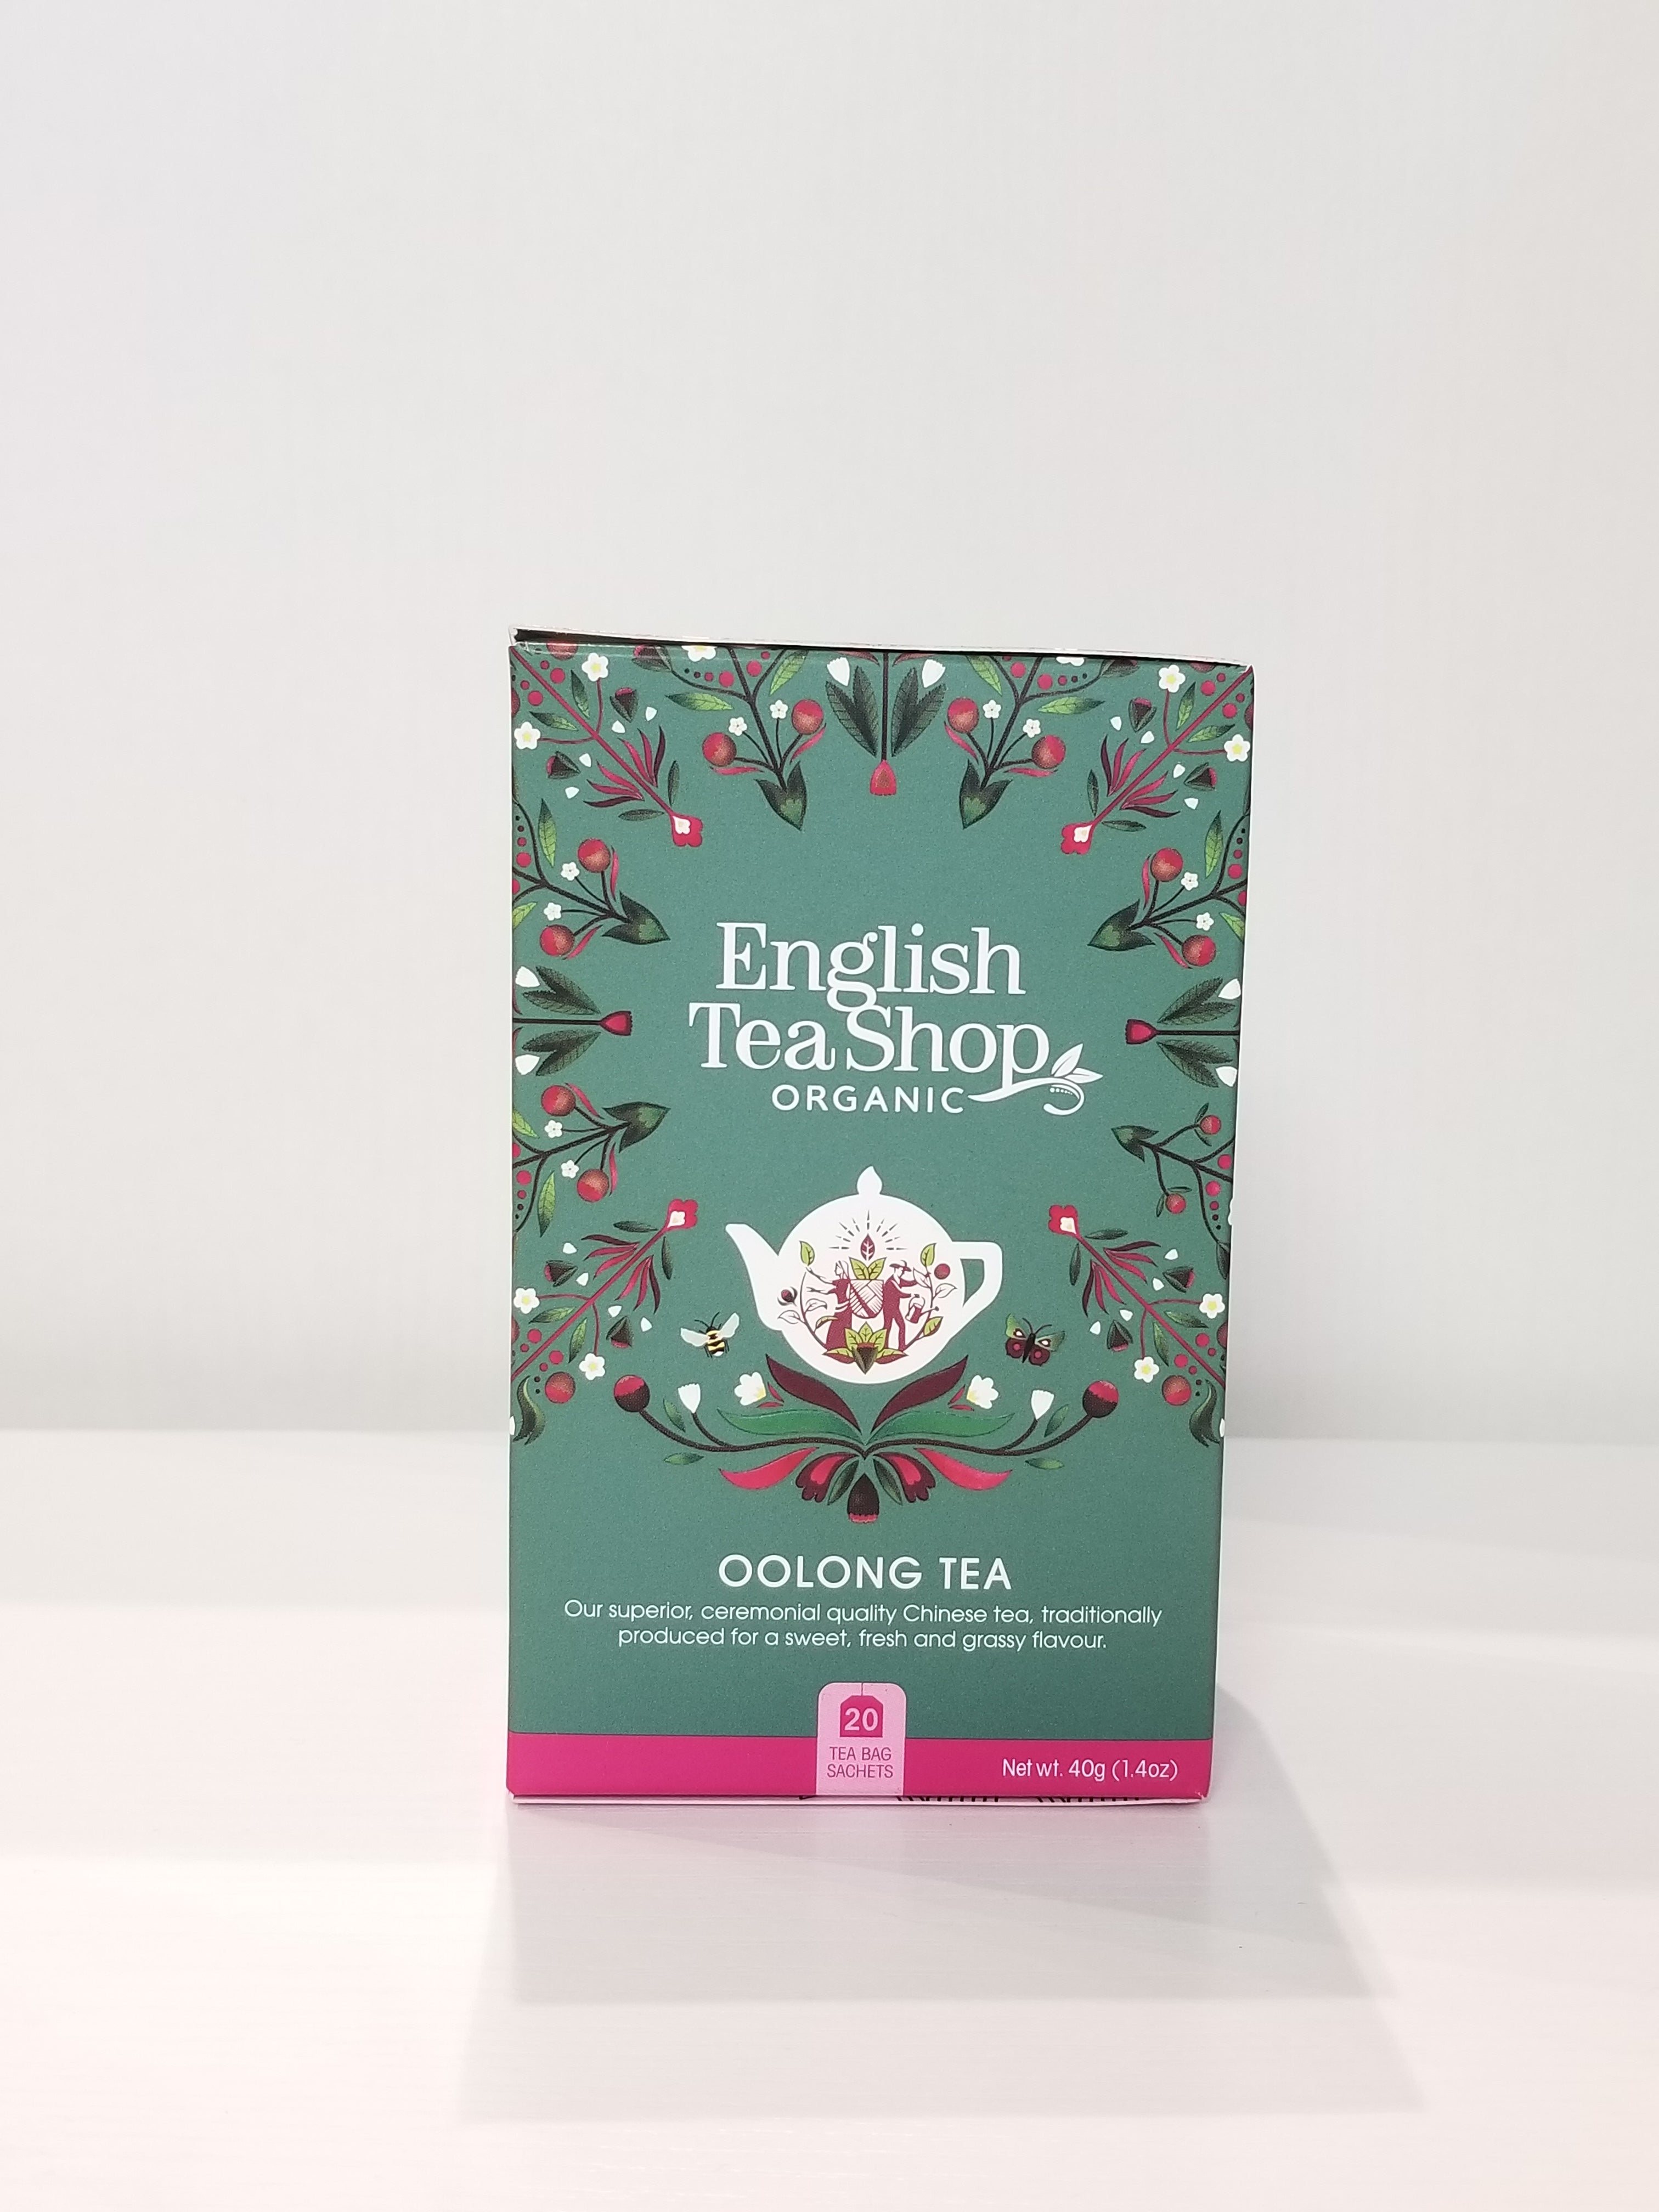 English Tea Shop Organic - Oolong Tea (烏龍茶)